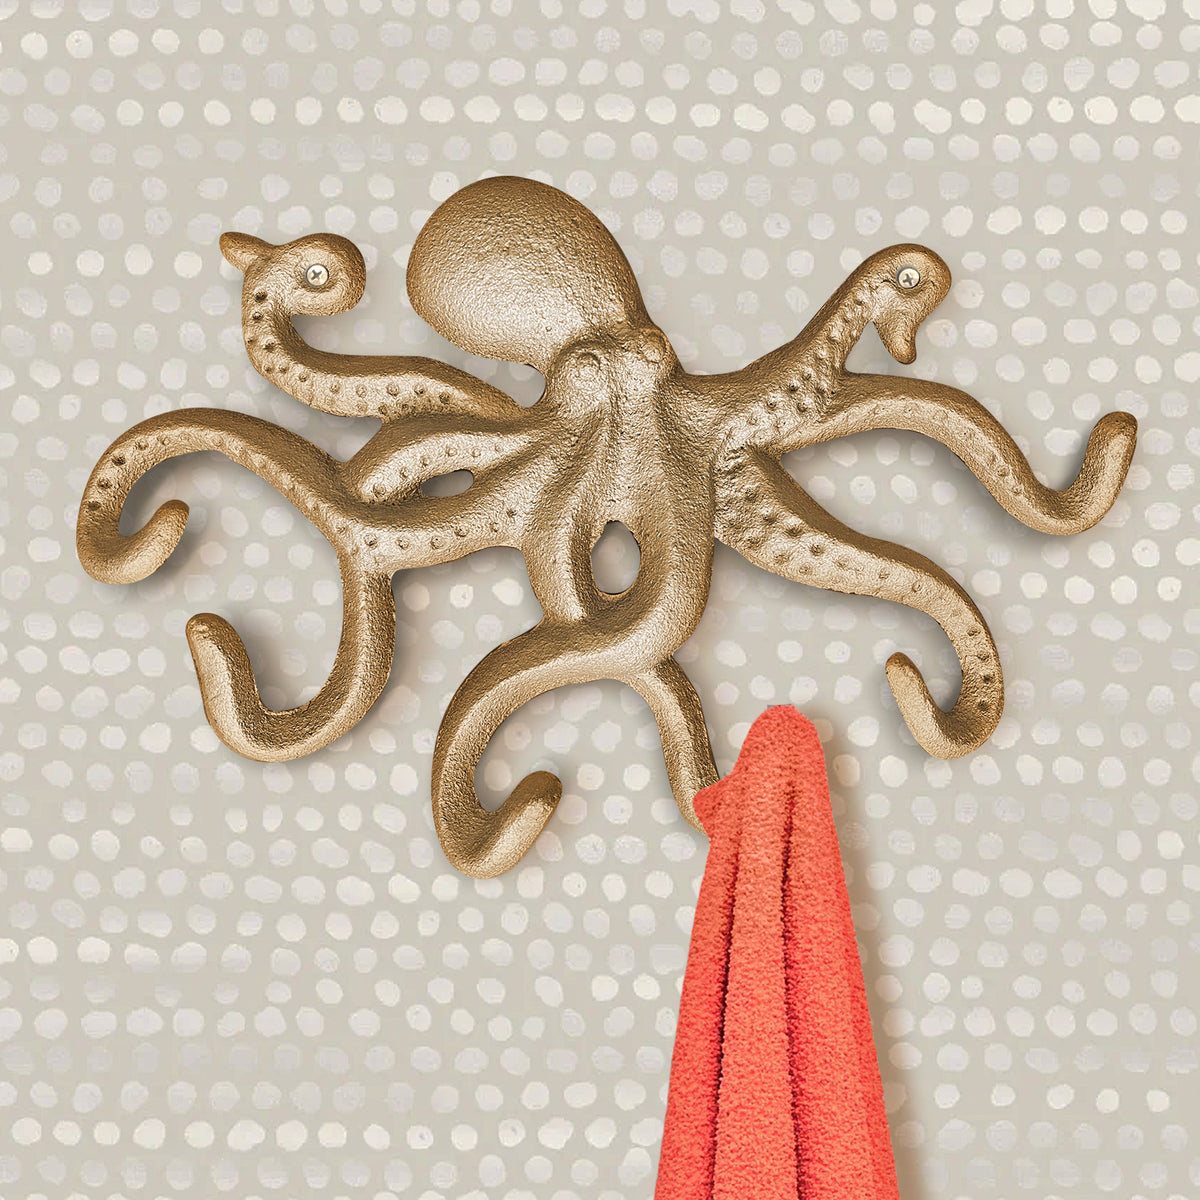 Cast Iron Octopus Key Holder With 6 Hooks